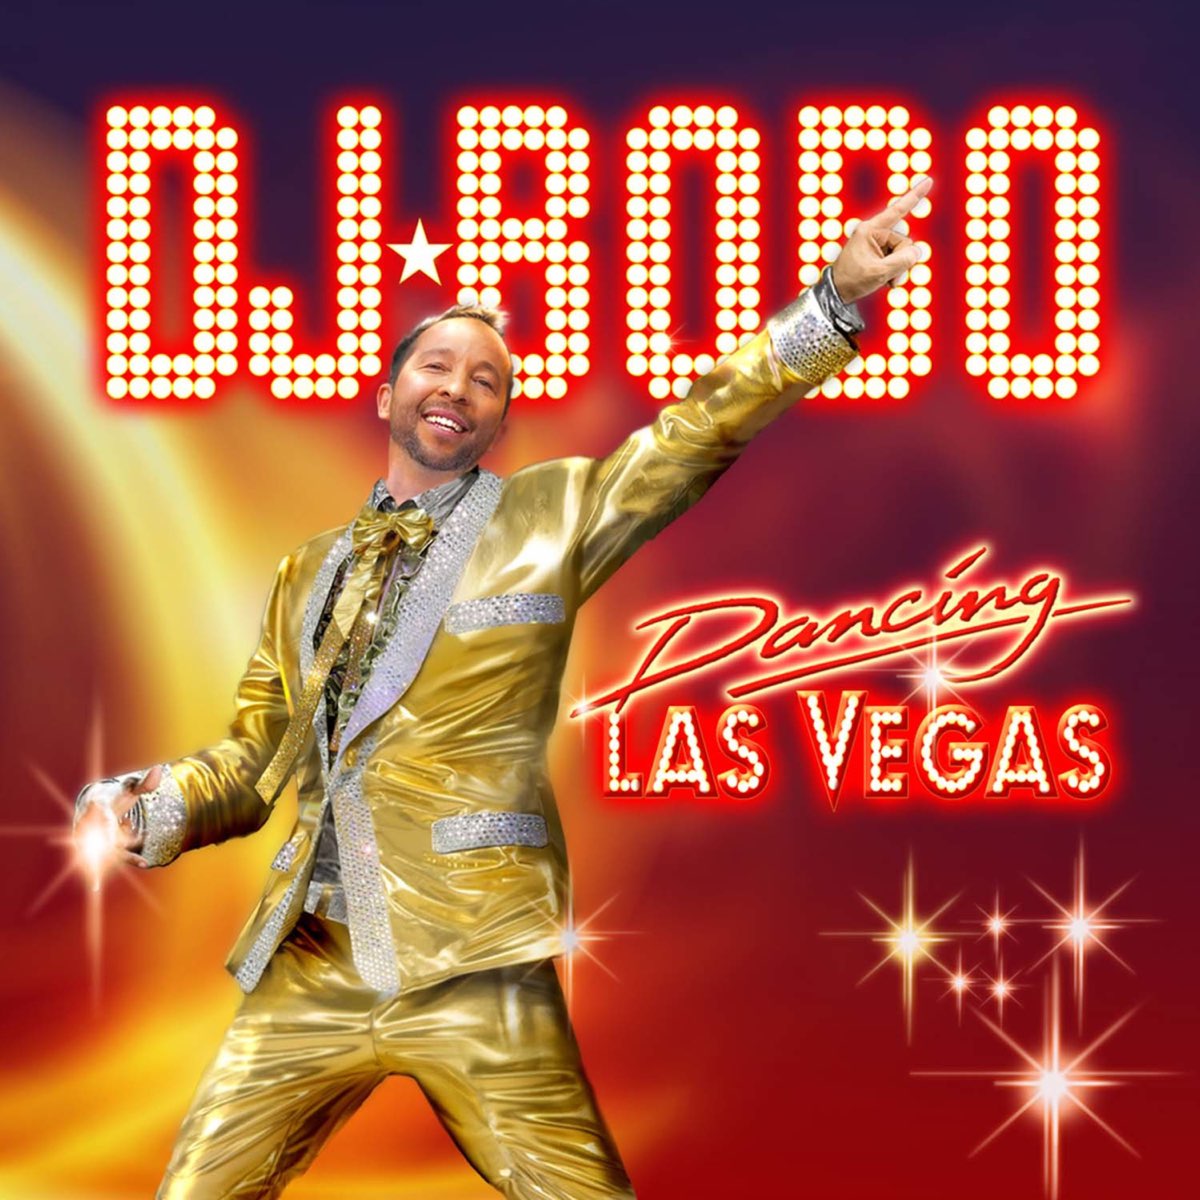 Dancing Las Vegas by DJ Bobo on Apple Music